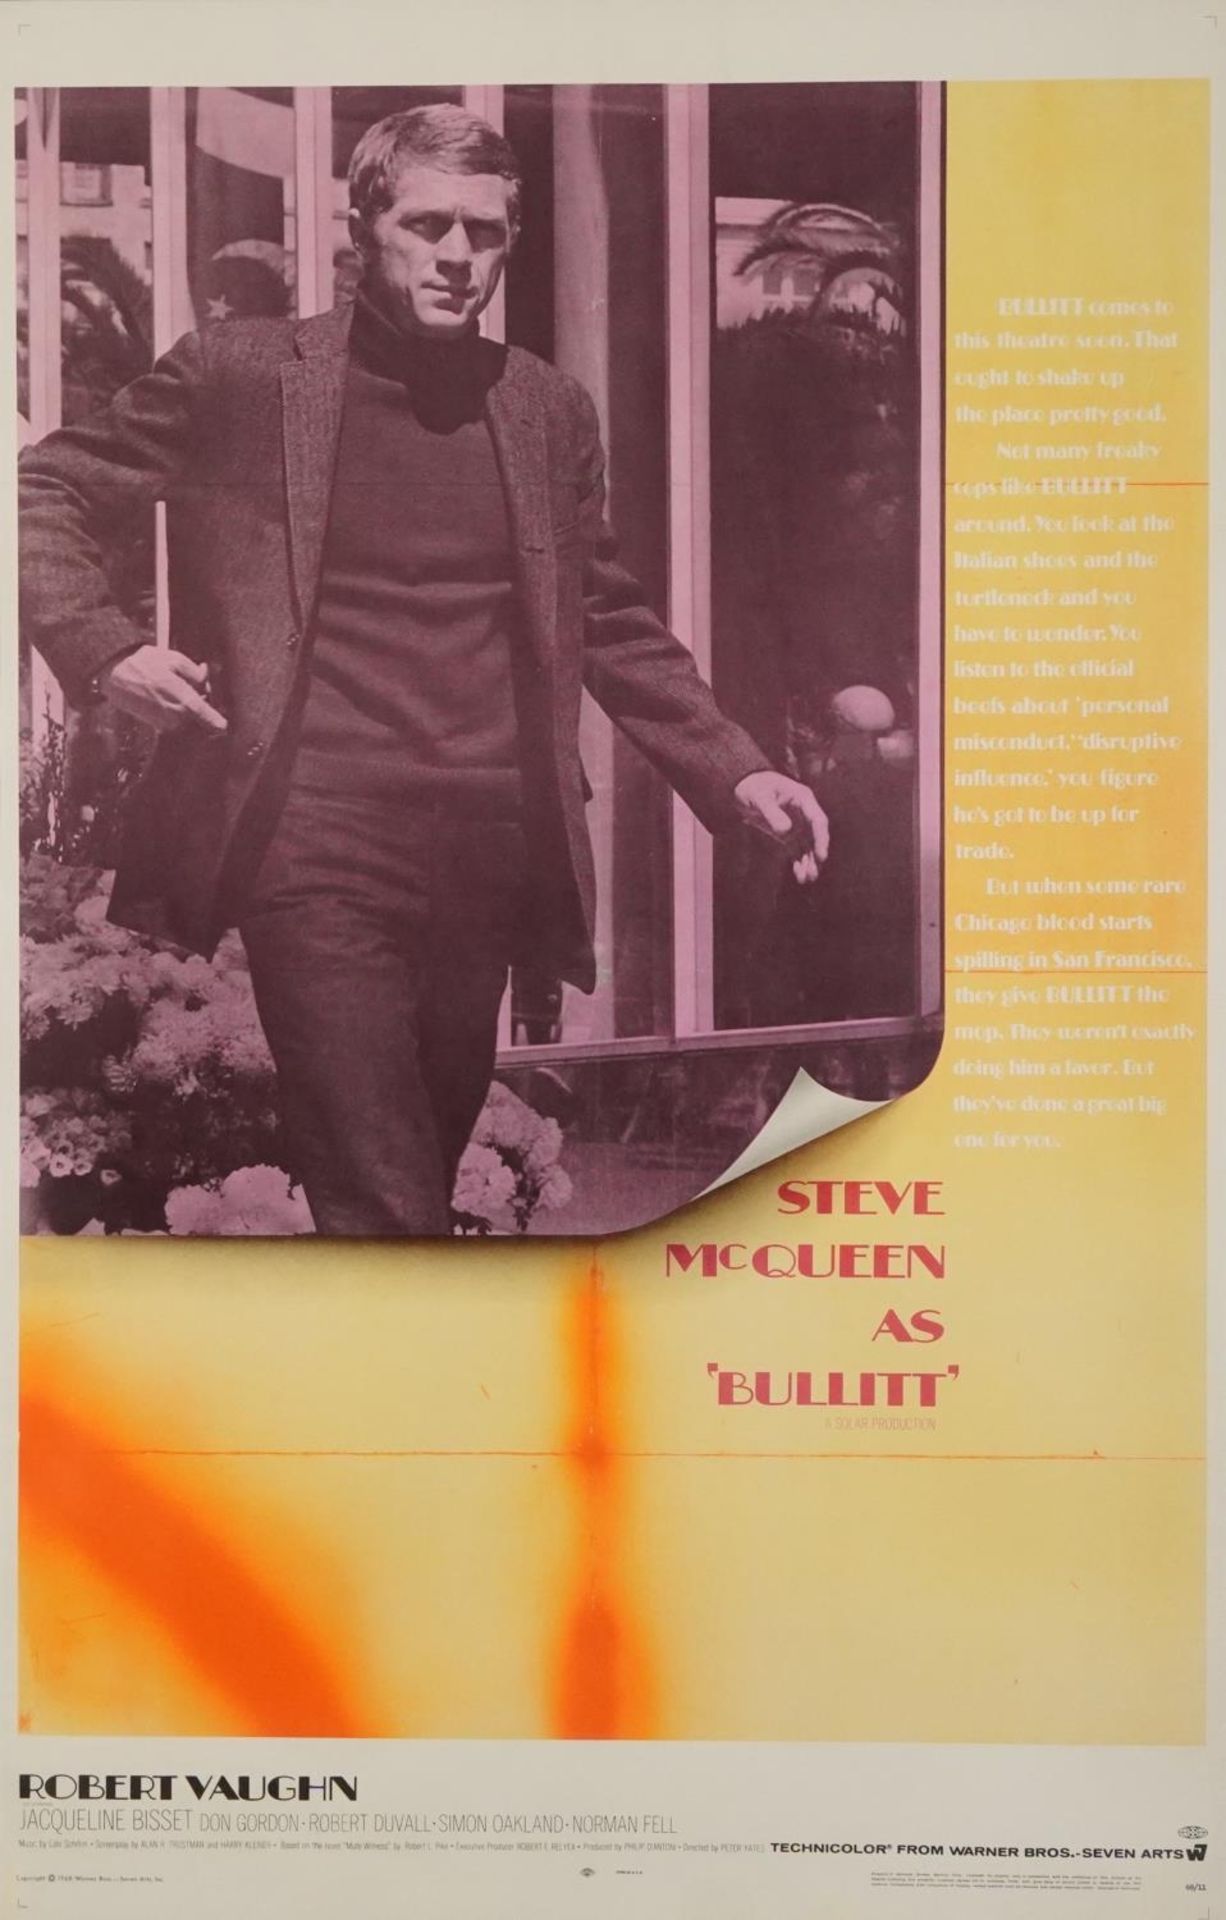 Steve McQueen interest Bullitt film poster, copyright 1968 Warner Bros, Seven Arts Inc, USA,